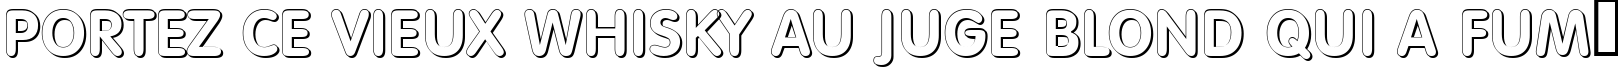 Пример написания шрифтом a_FuturaRoundTitulSh текста на французском